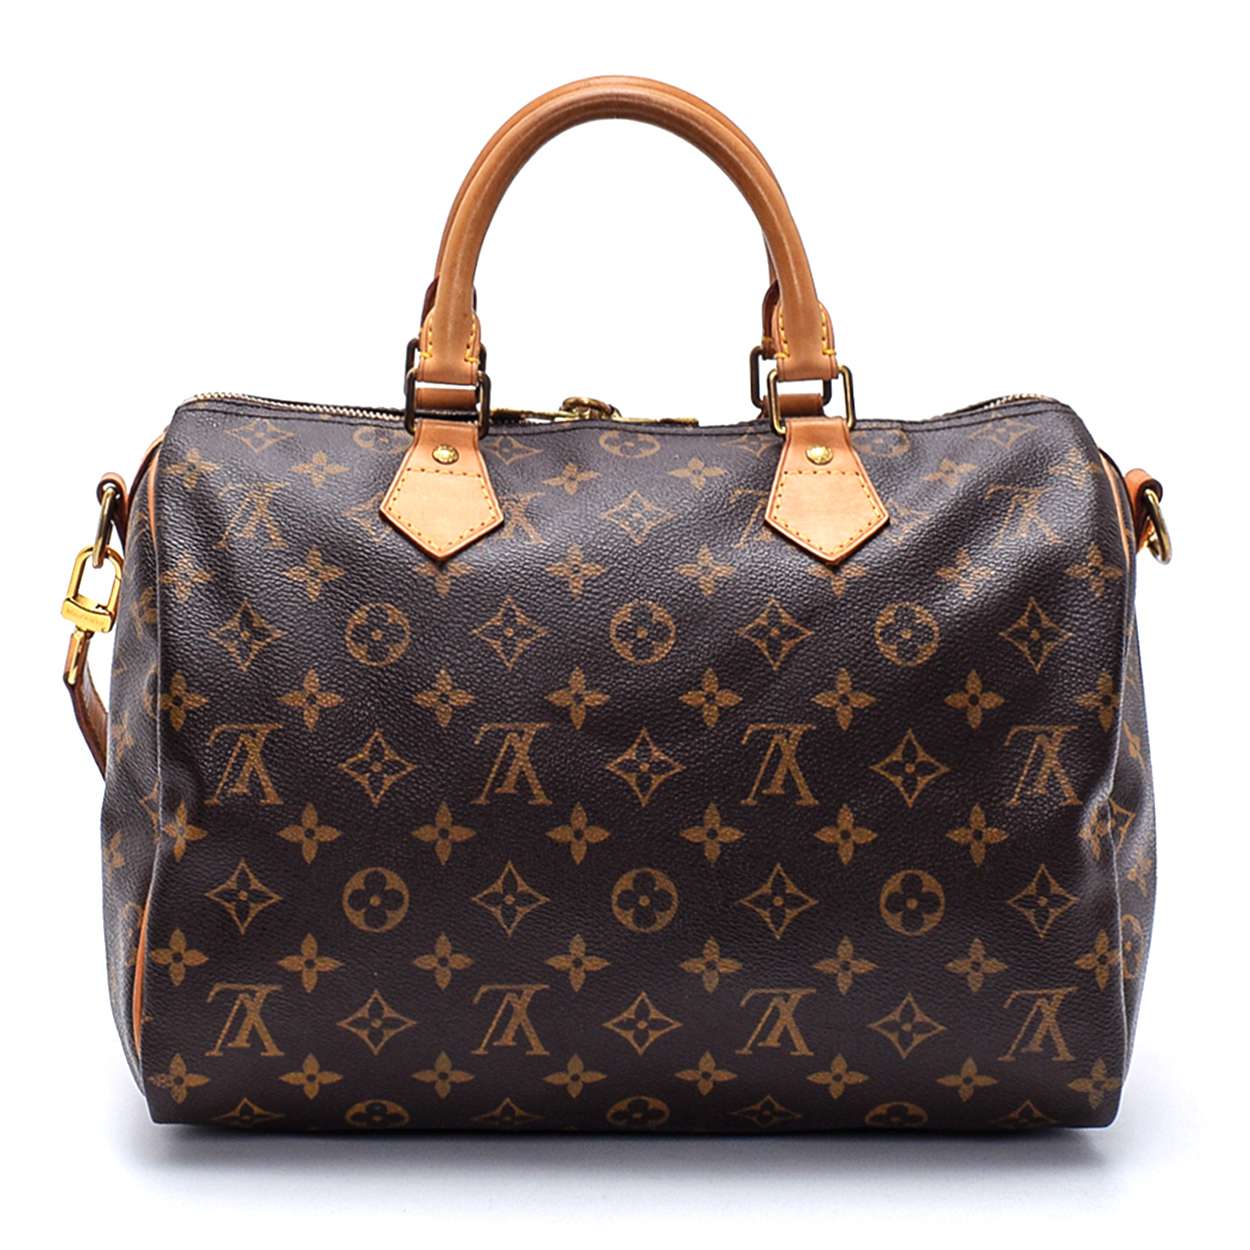 Louis Vuitton - Monogram Canvas Leather Speedy 30 Bandouilere Bag